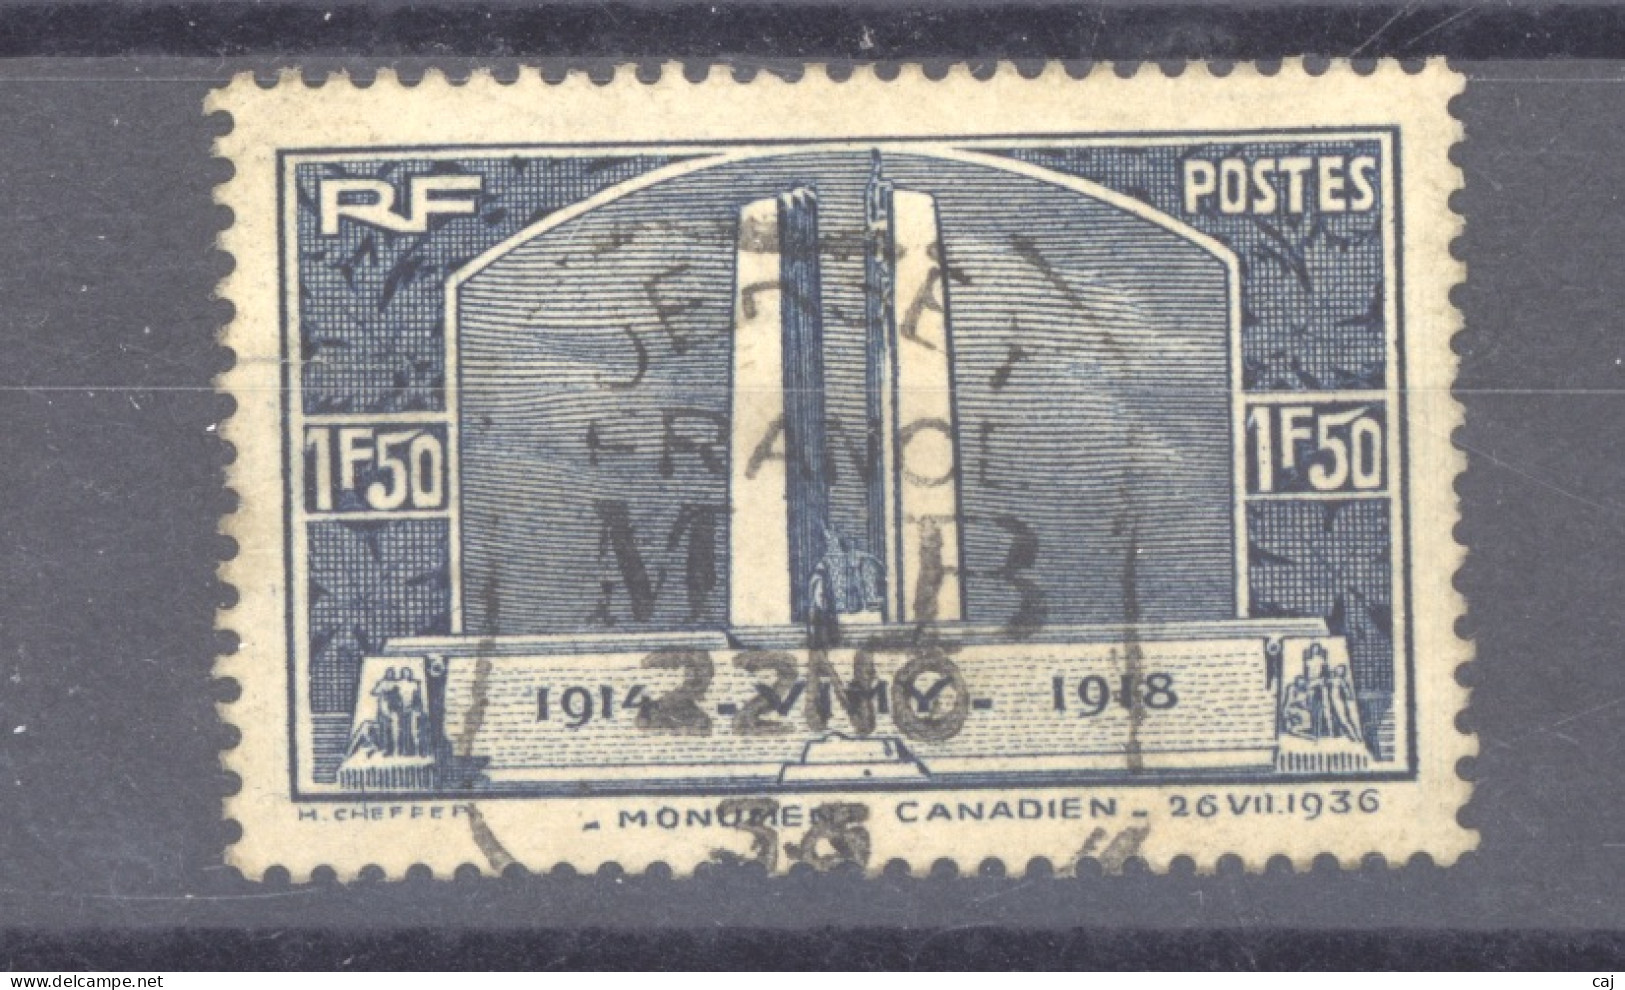 7543  -  France  :  Yv  356  (o)  Obl.  JERSEY / FRANCE /  MB  Mobile Box - Maritime Post